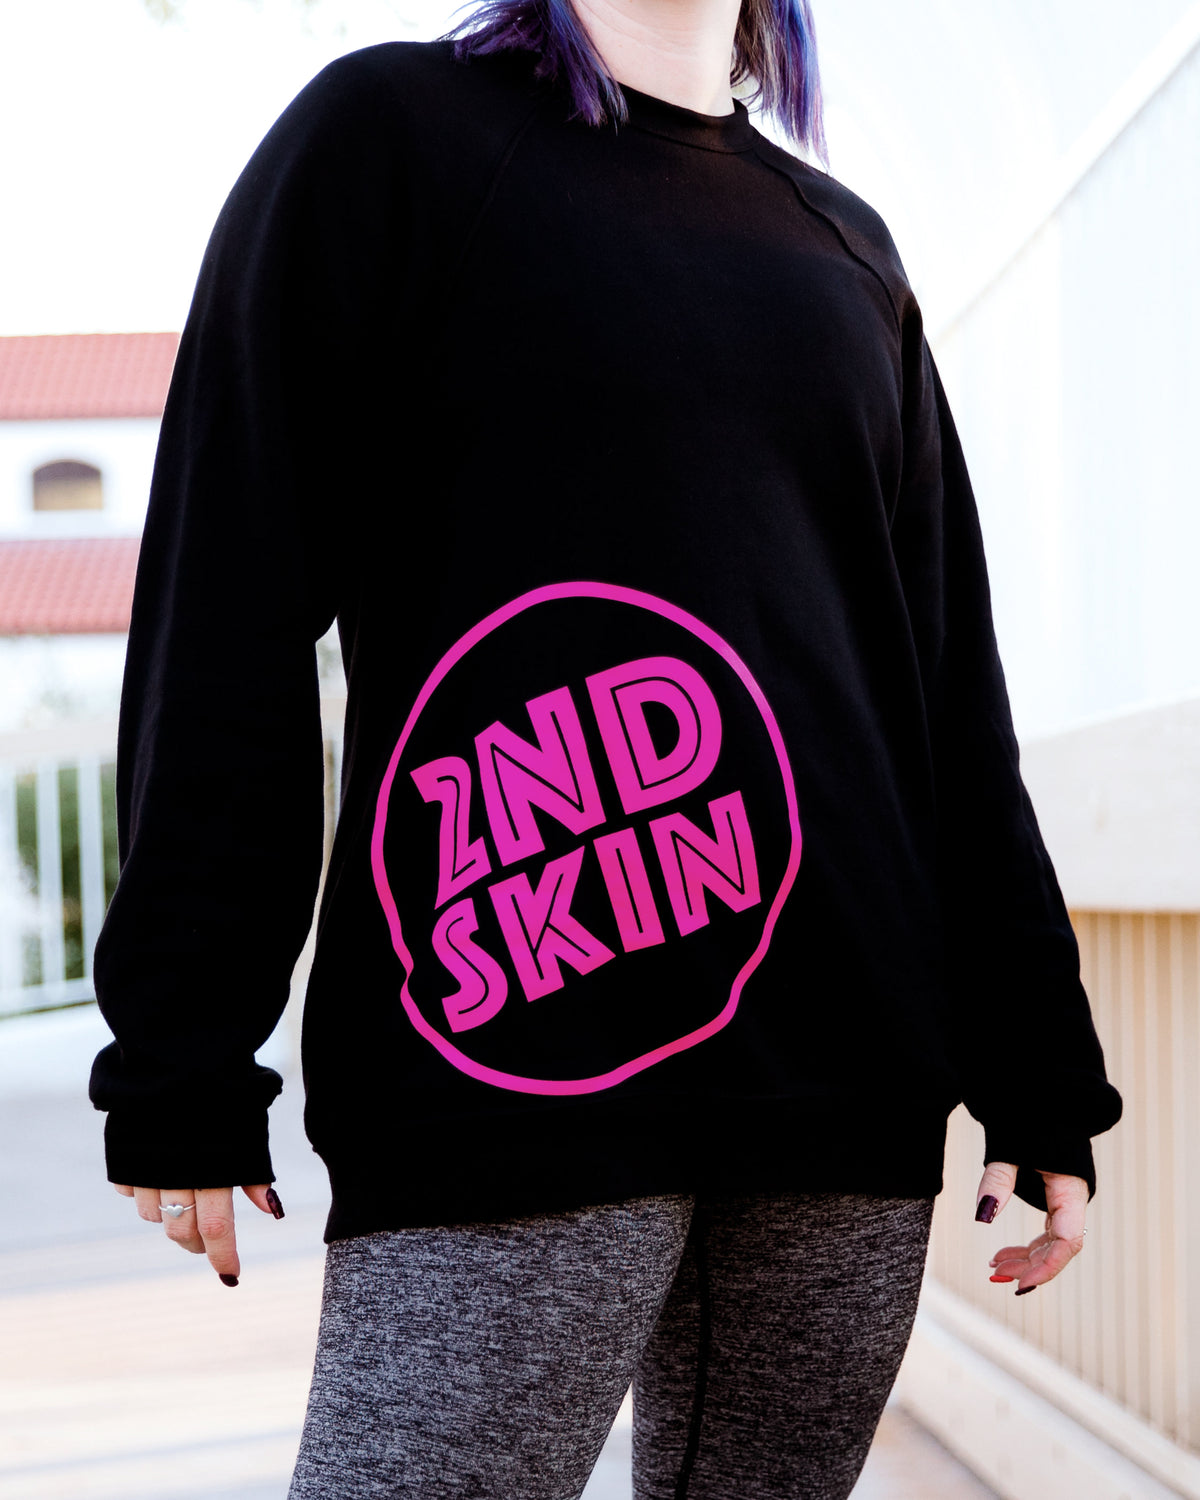 2nd Skin Sweatshirt